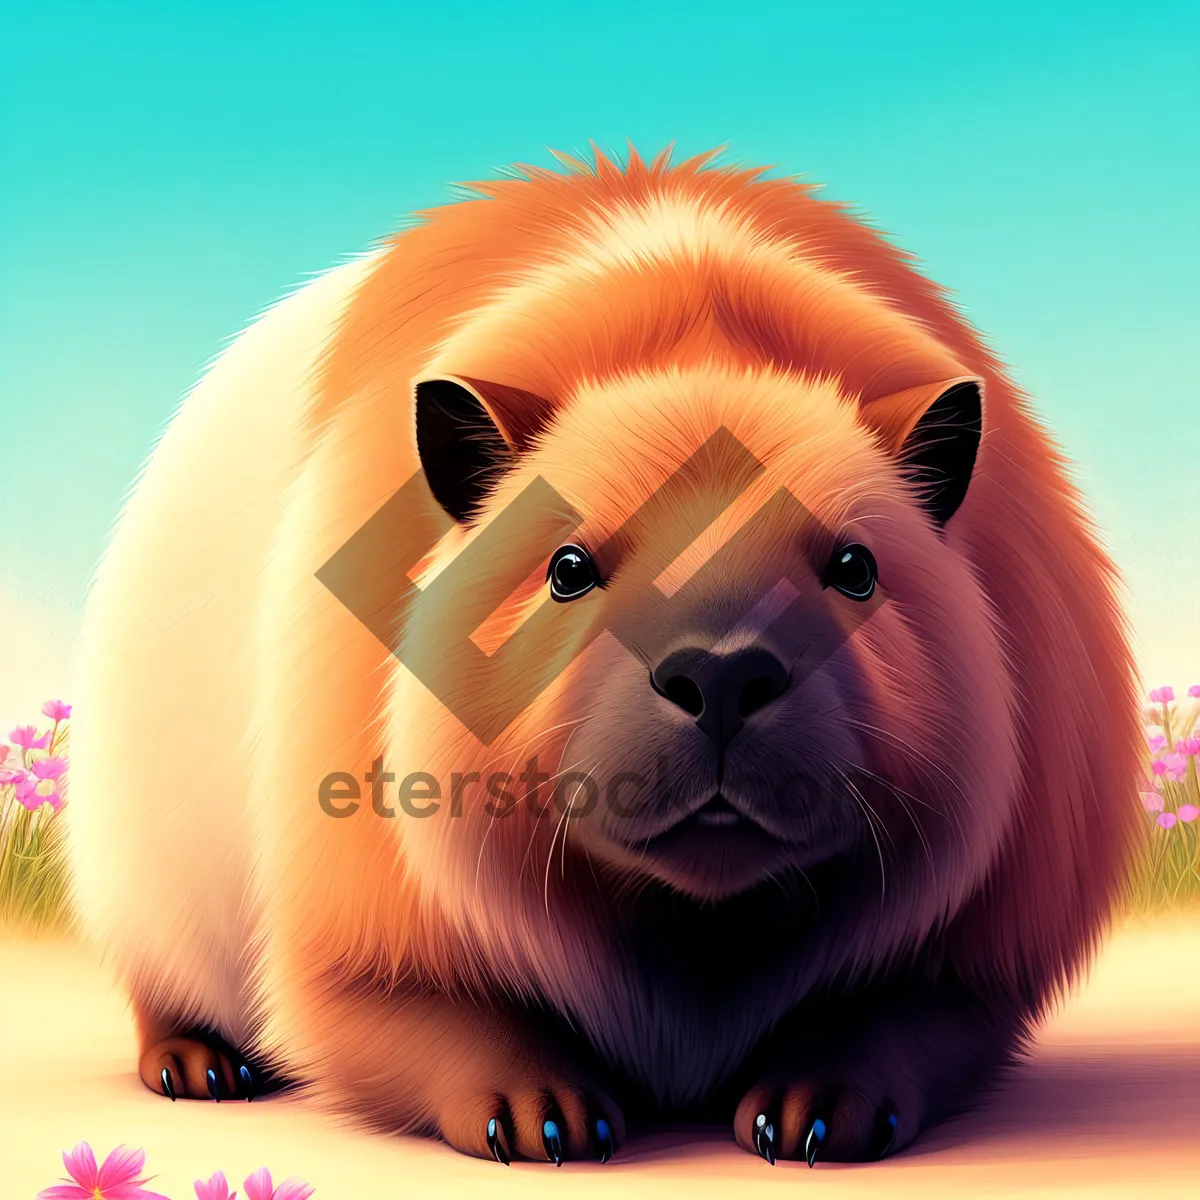 Picture of Fluffy Guinea Pig Portrait in Studio